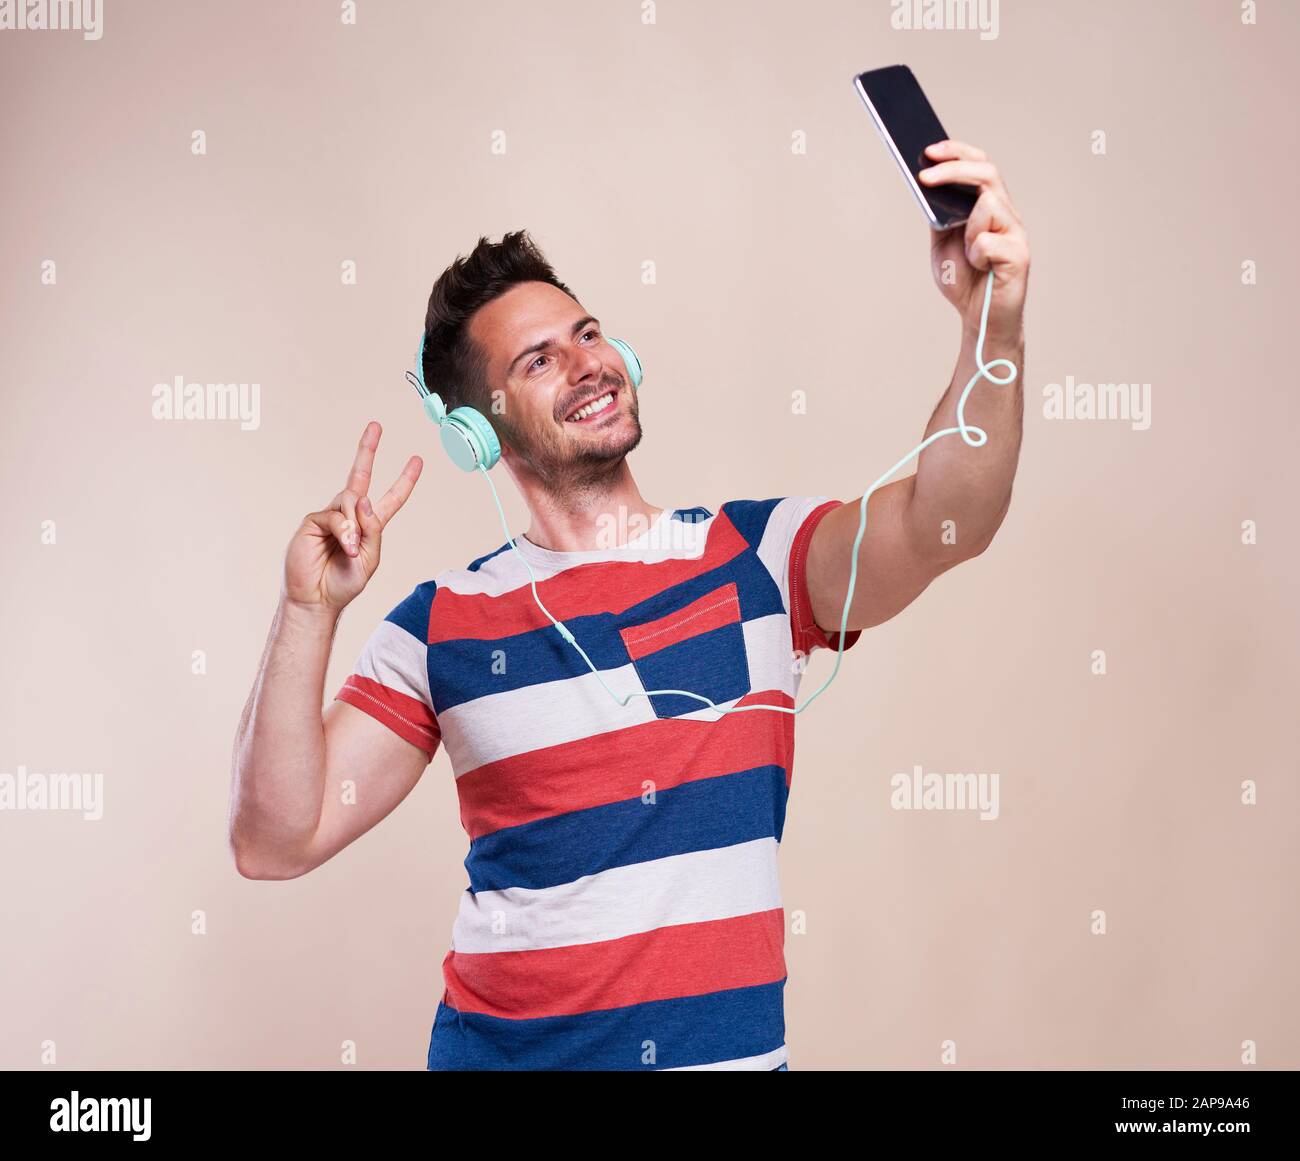 Young man making selfie in studio shot Stock Photo